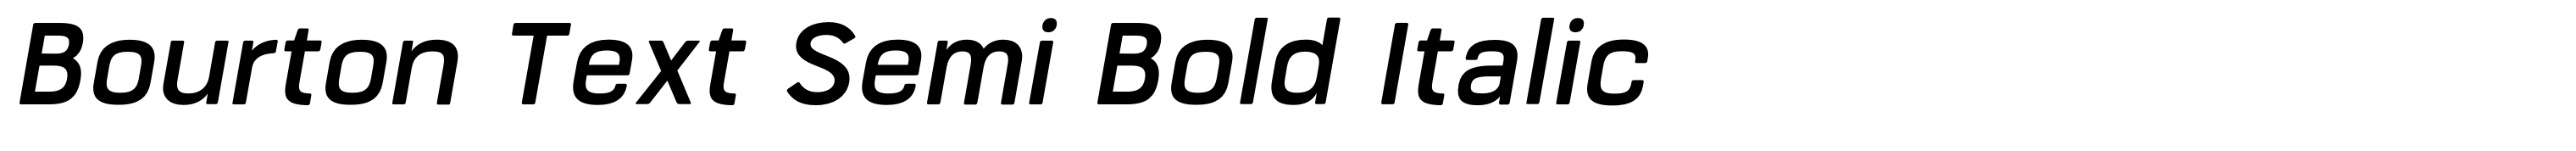 Bourton Text Semi Bold Italic